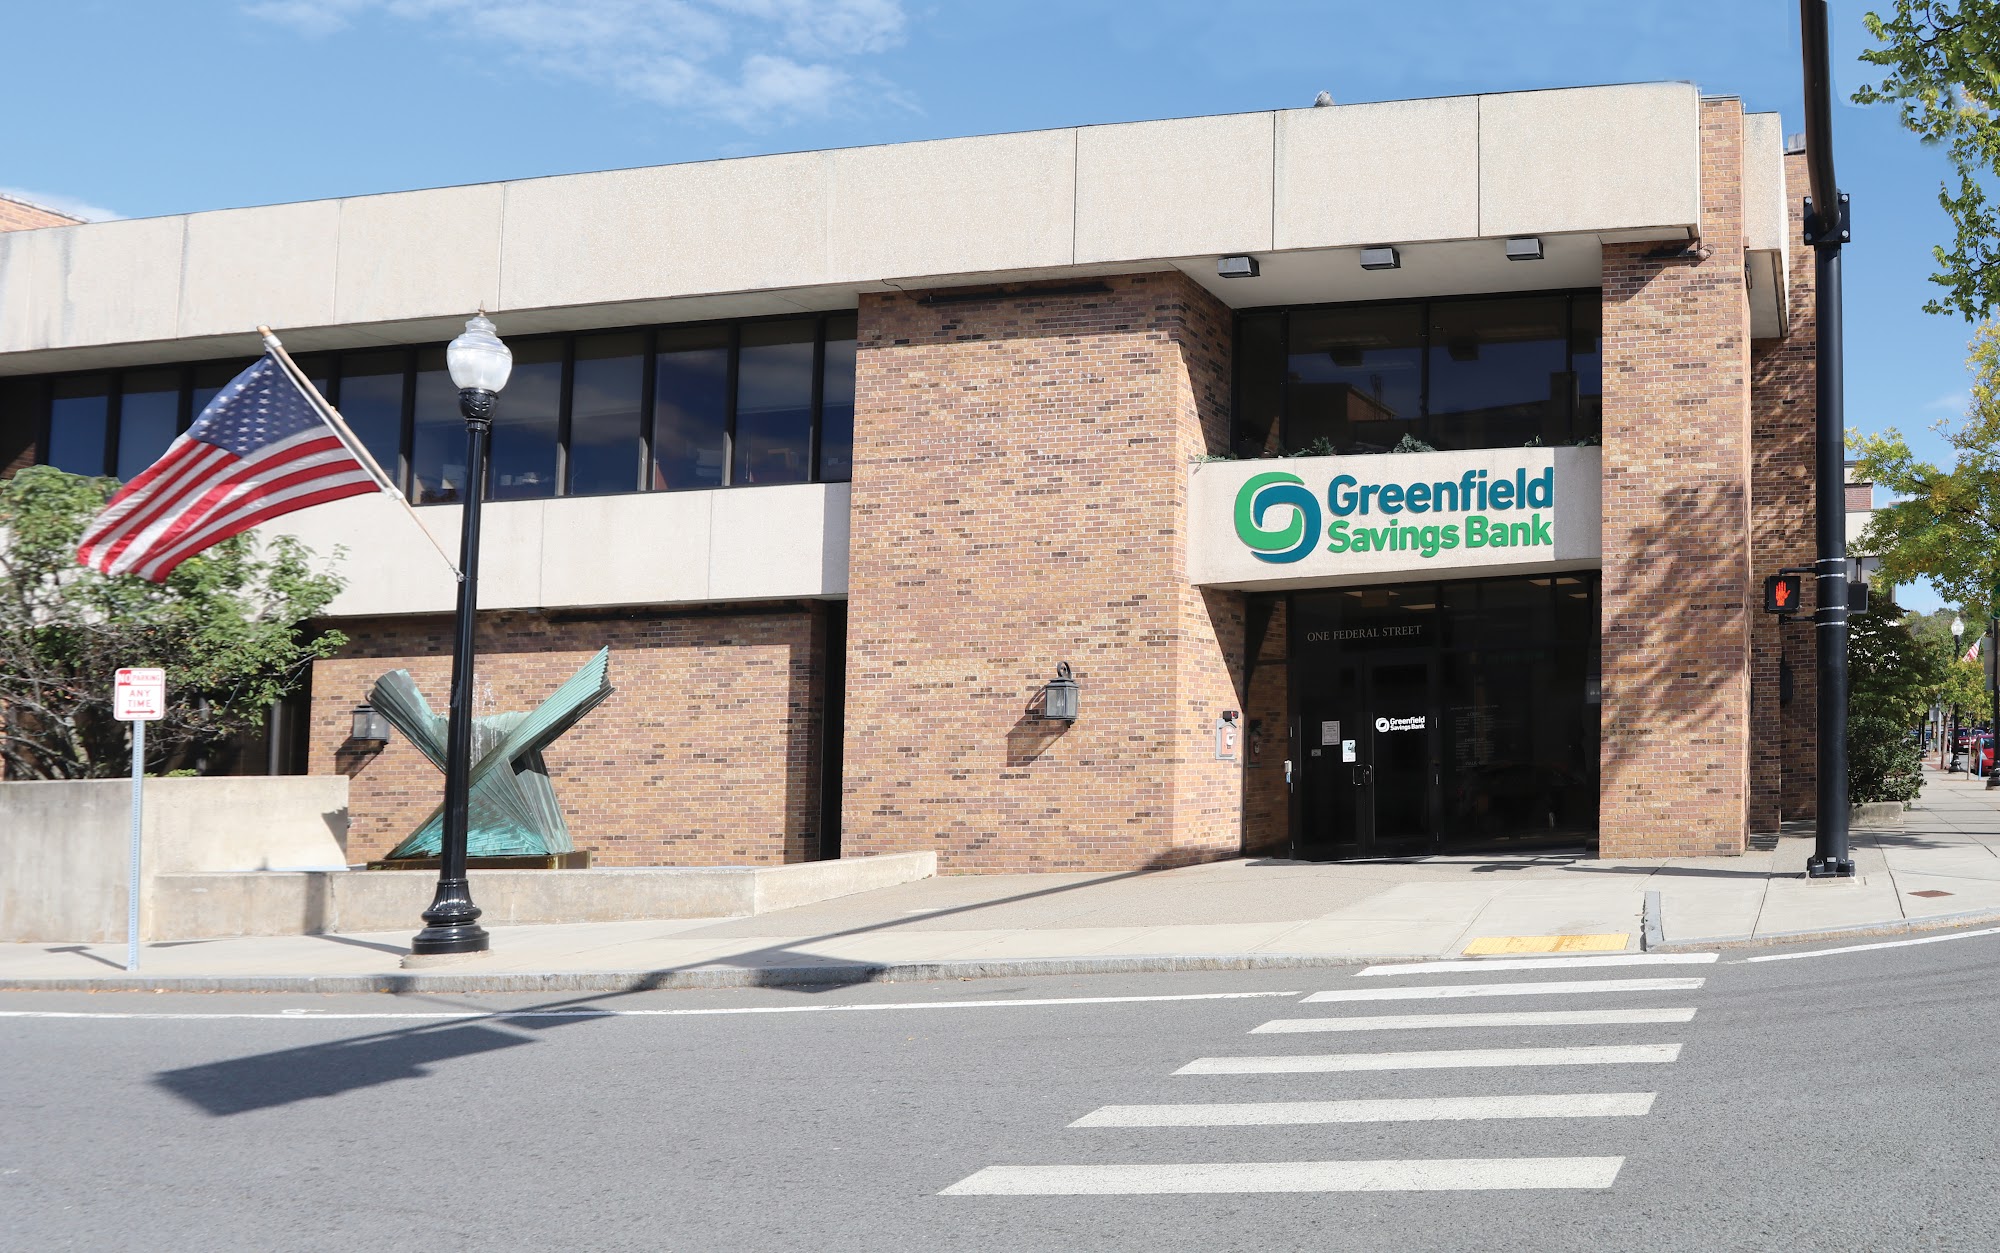 Greenfield Savings Bank